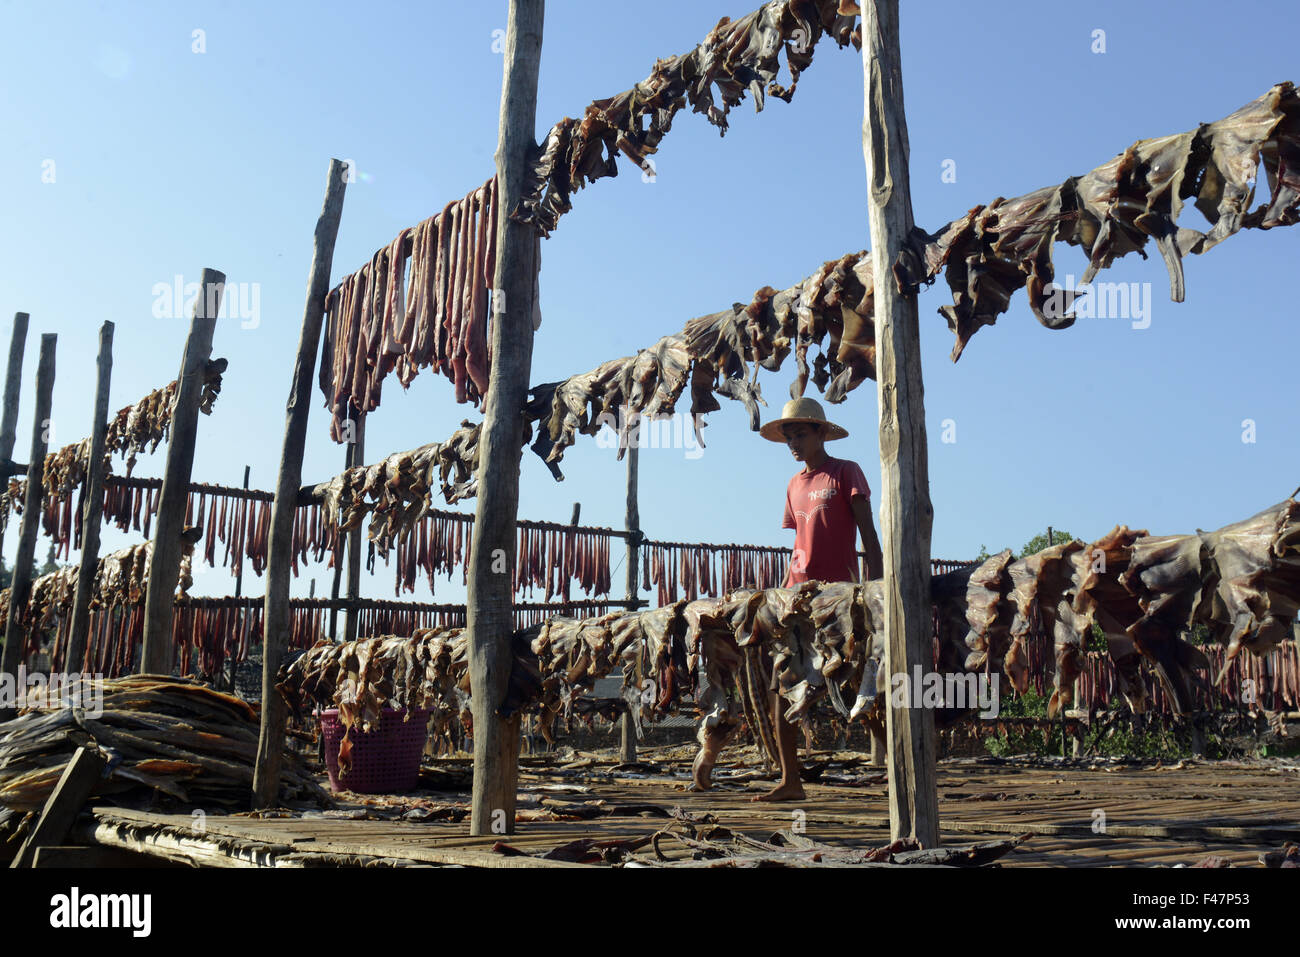 ASIA MYANMAR MYEIK DRY FISH PRODUCTION Stock Photo